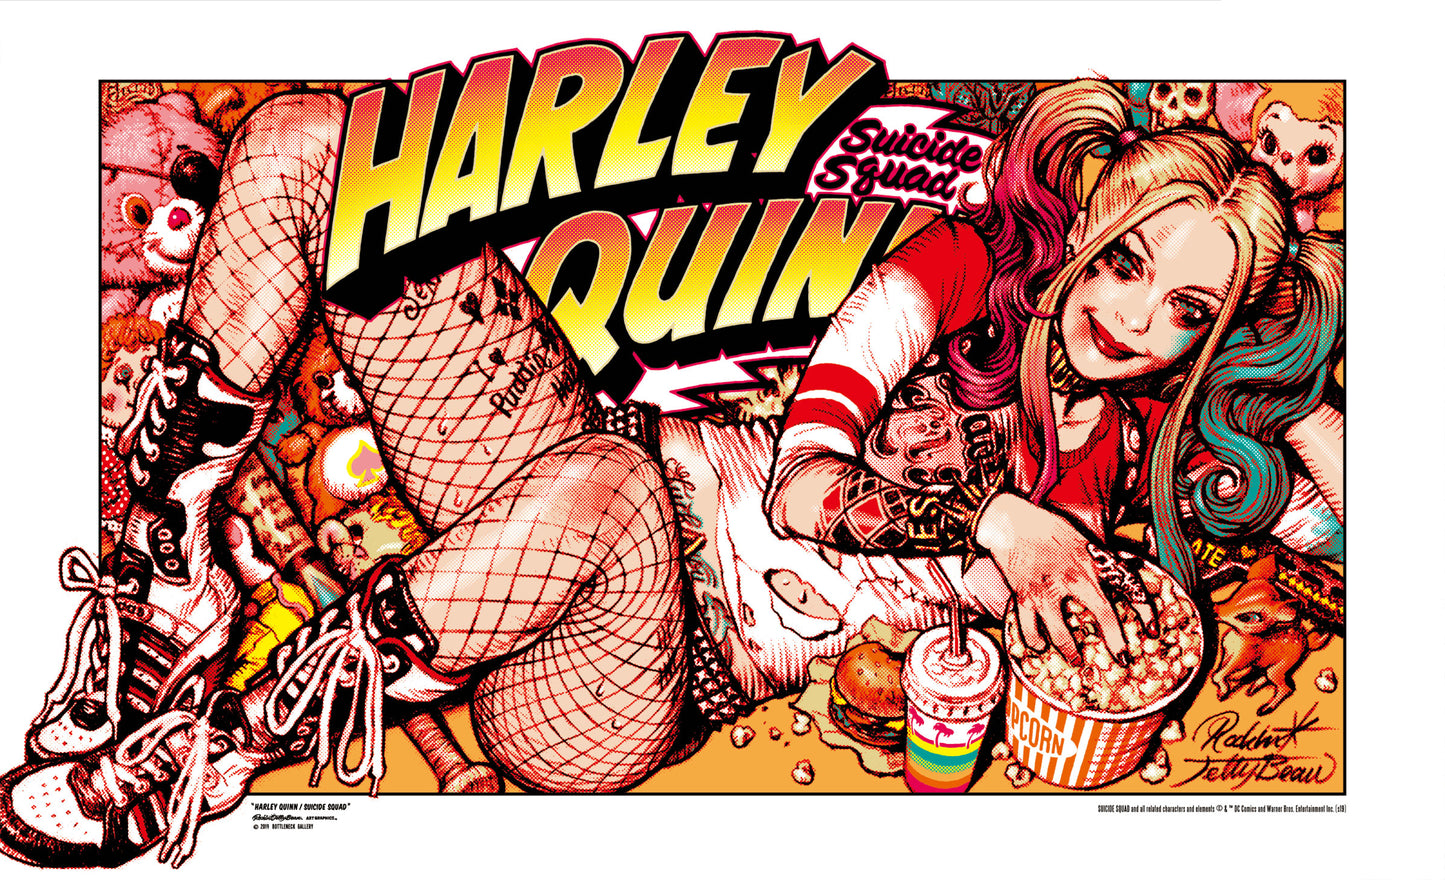 Rockin Jelly Bean "Harley Quinn"